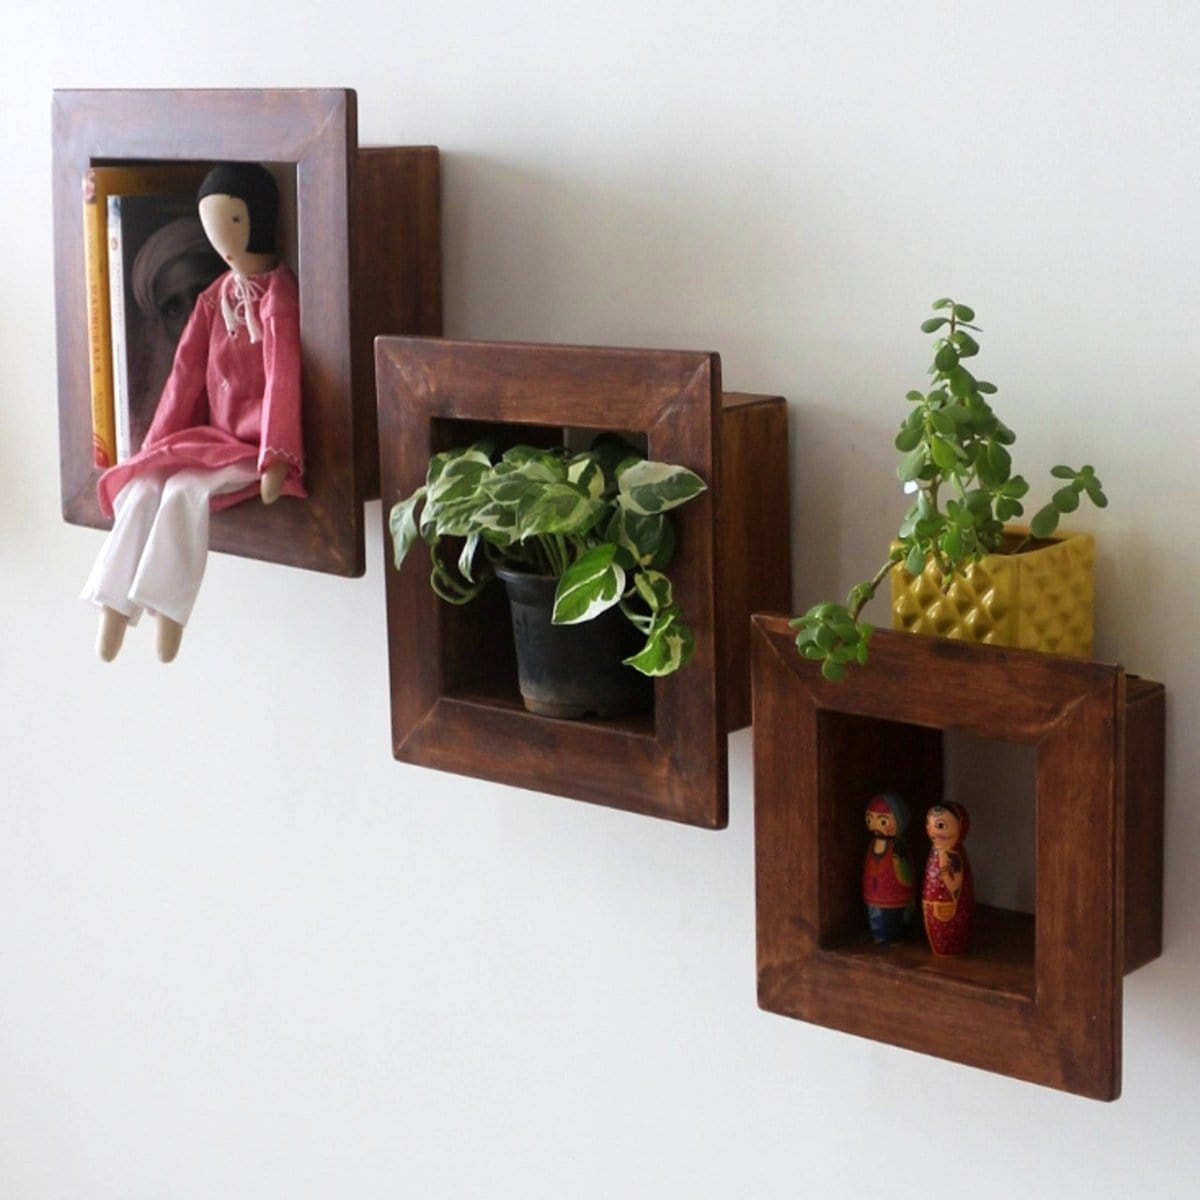 Barish Wall Shelves (Set of 3) Walnut BH0074WT Best Home Decor Handcrafted